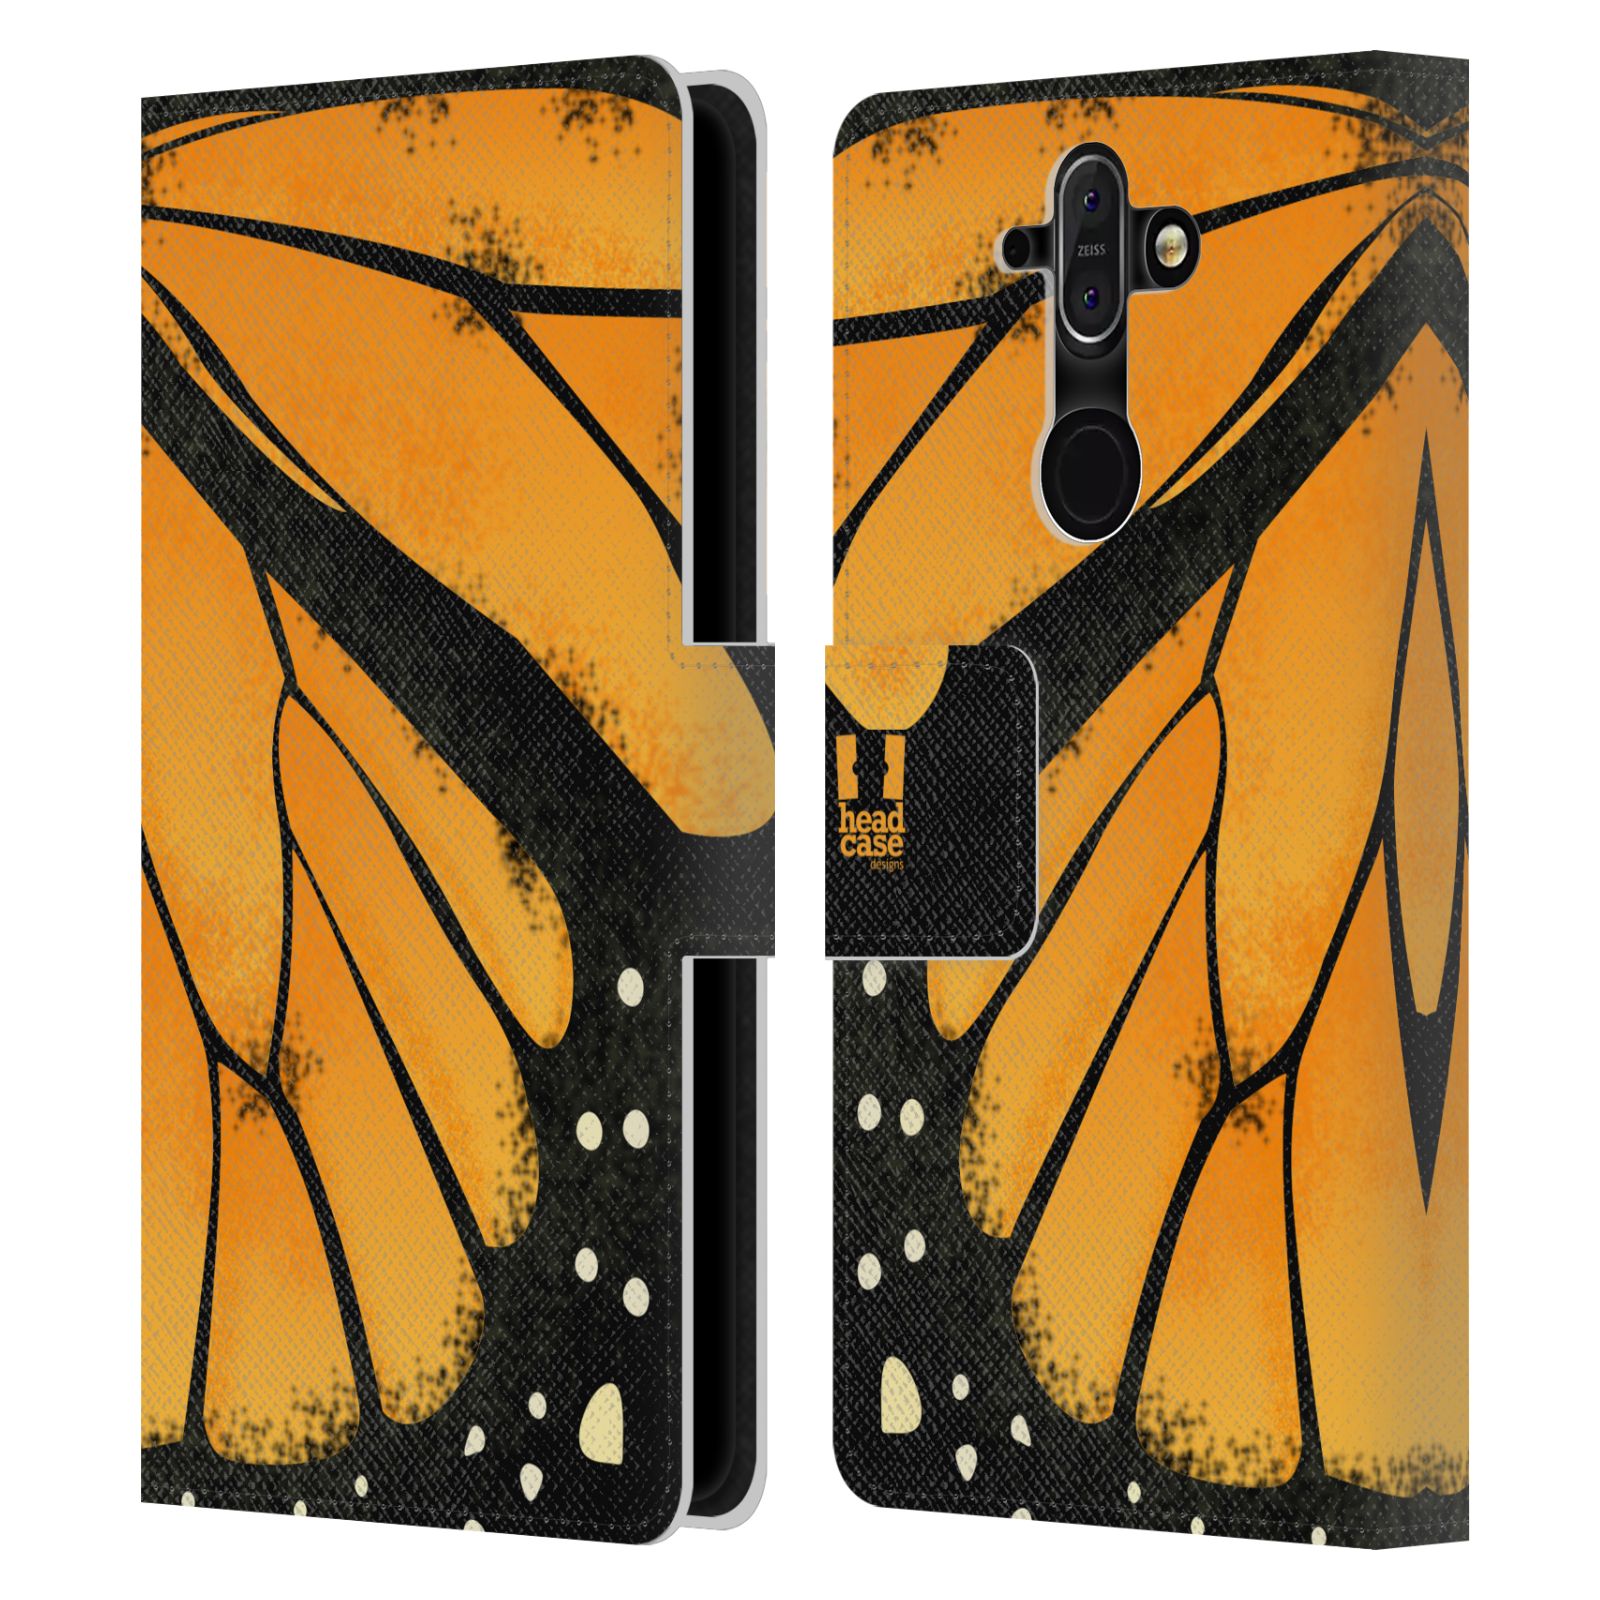 HEAD CASE Flipové pouzdro pro mobil Nokia 8 SIROCCO motýl a křídla kreslený vzor MONARCHA žlutá